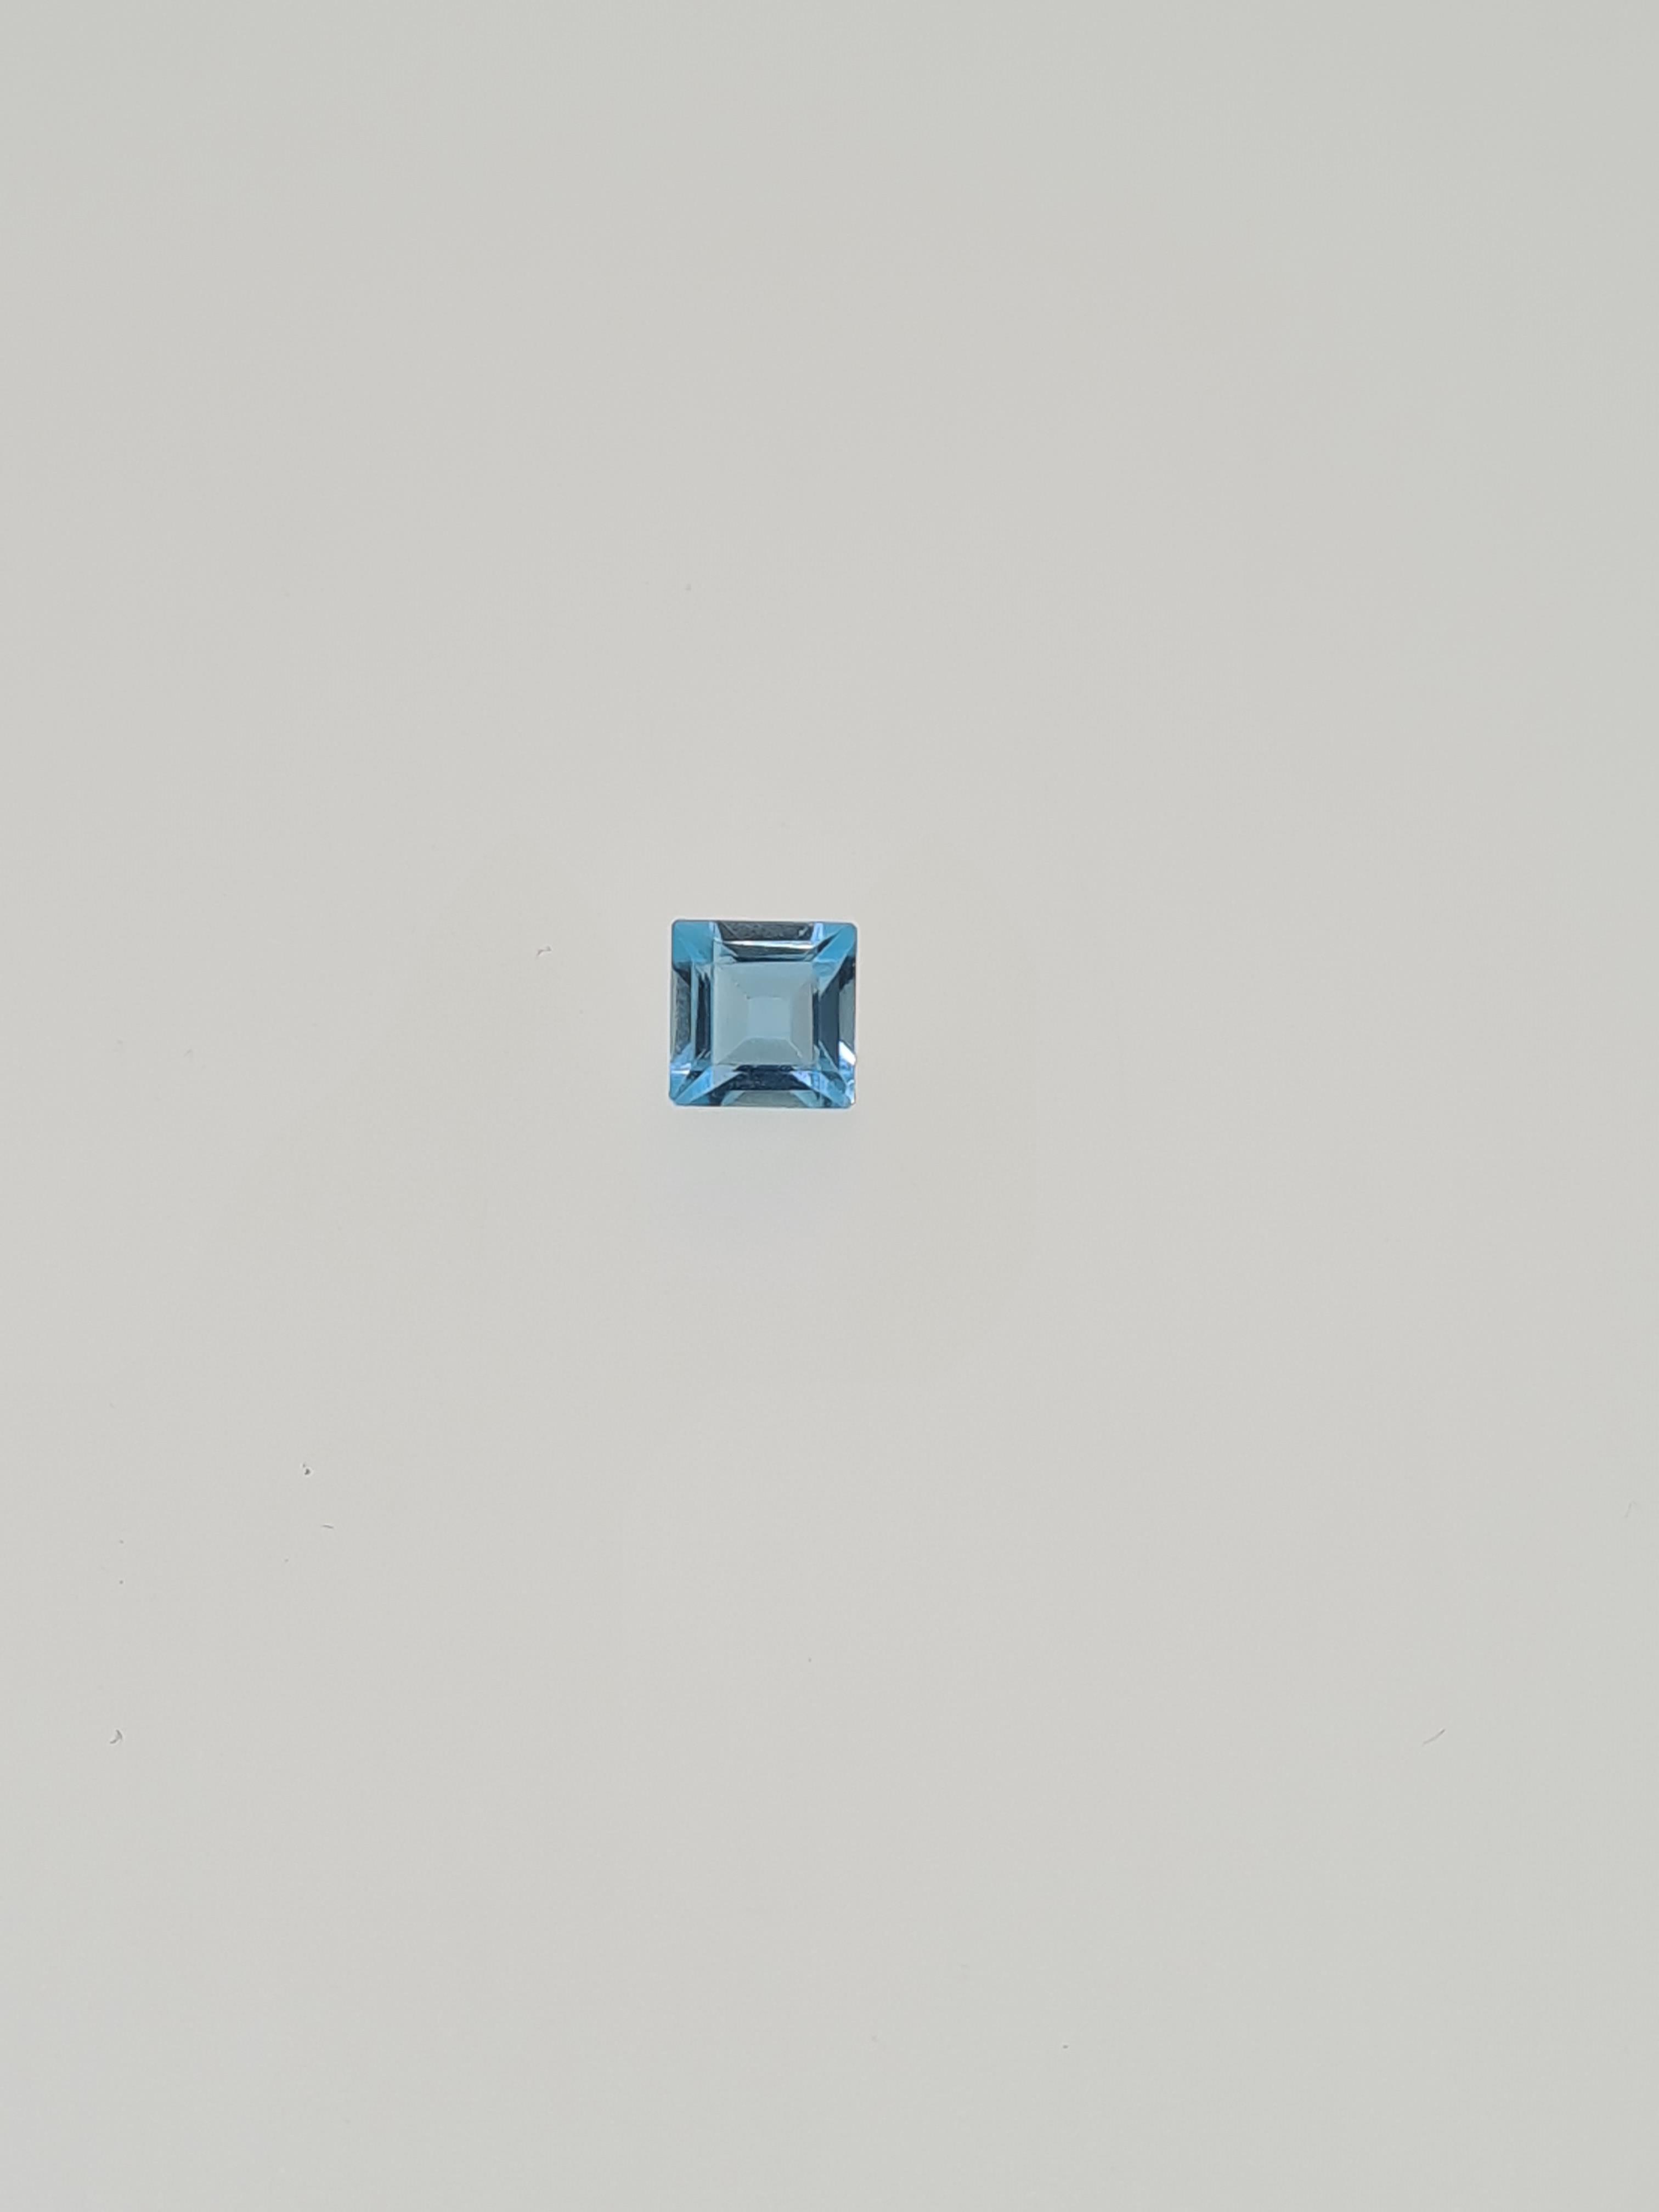 Blue topaz sqaure cut gem stone - Image 3 of 3